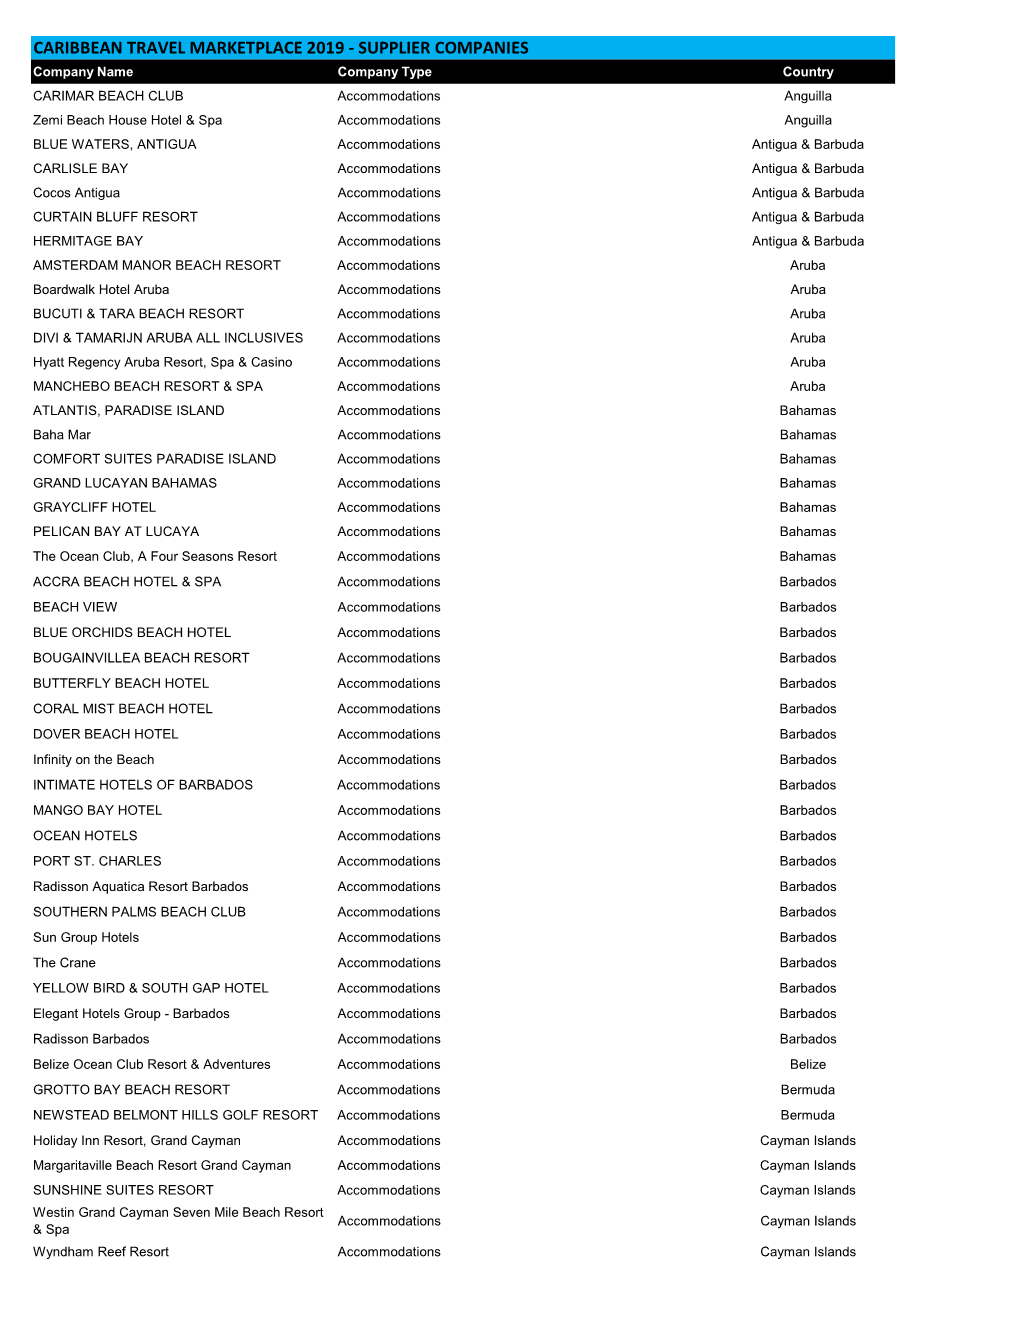 List of 2019 Supplier Companies